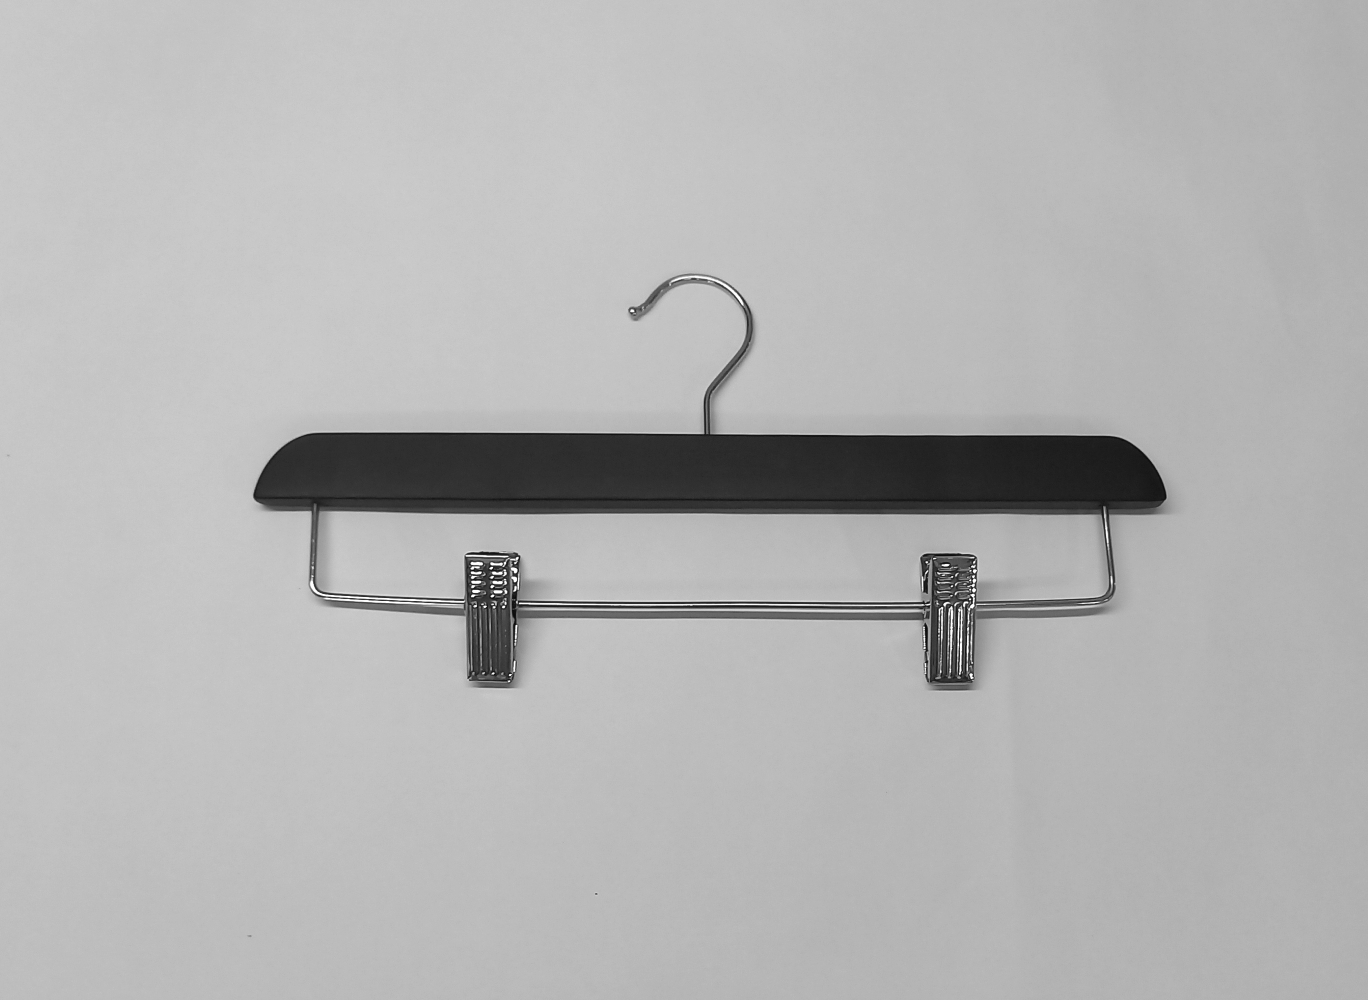 Hosenbügel Lotusholz, Länge 34cm, mit Metallsteg mit 2 Klammern, schwarz